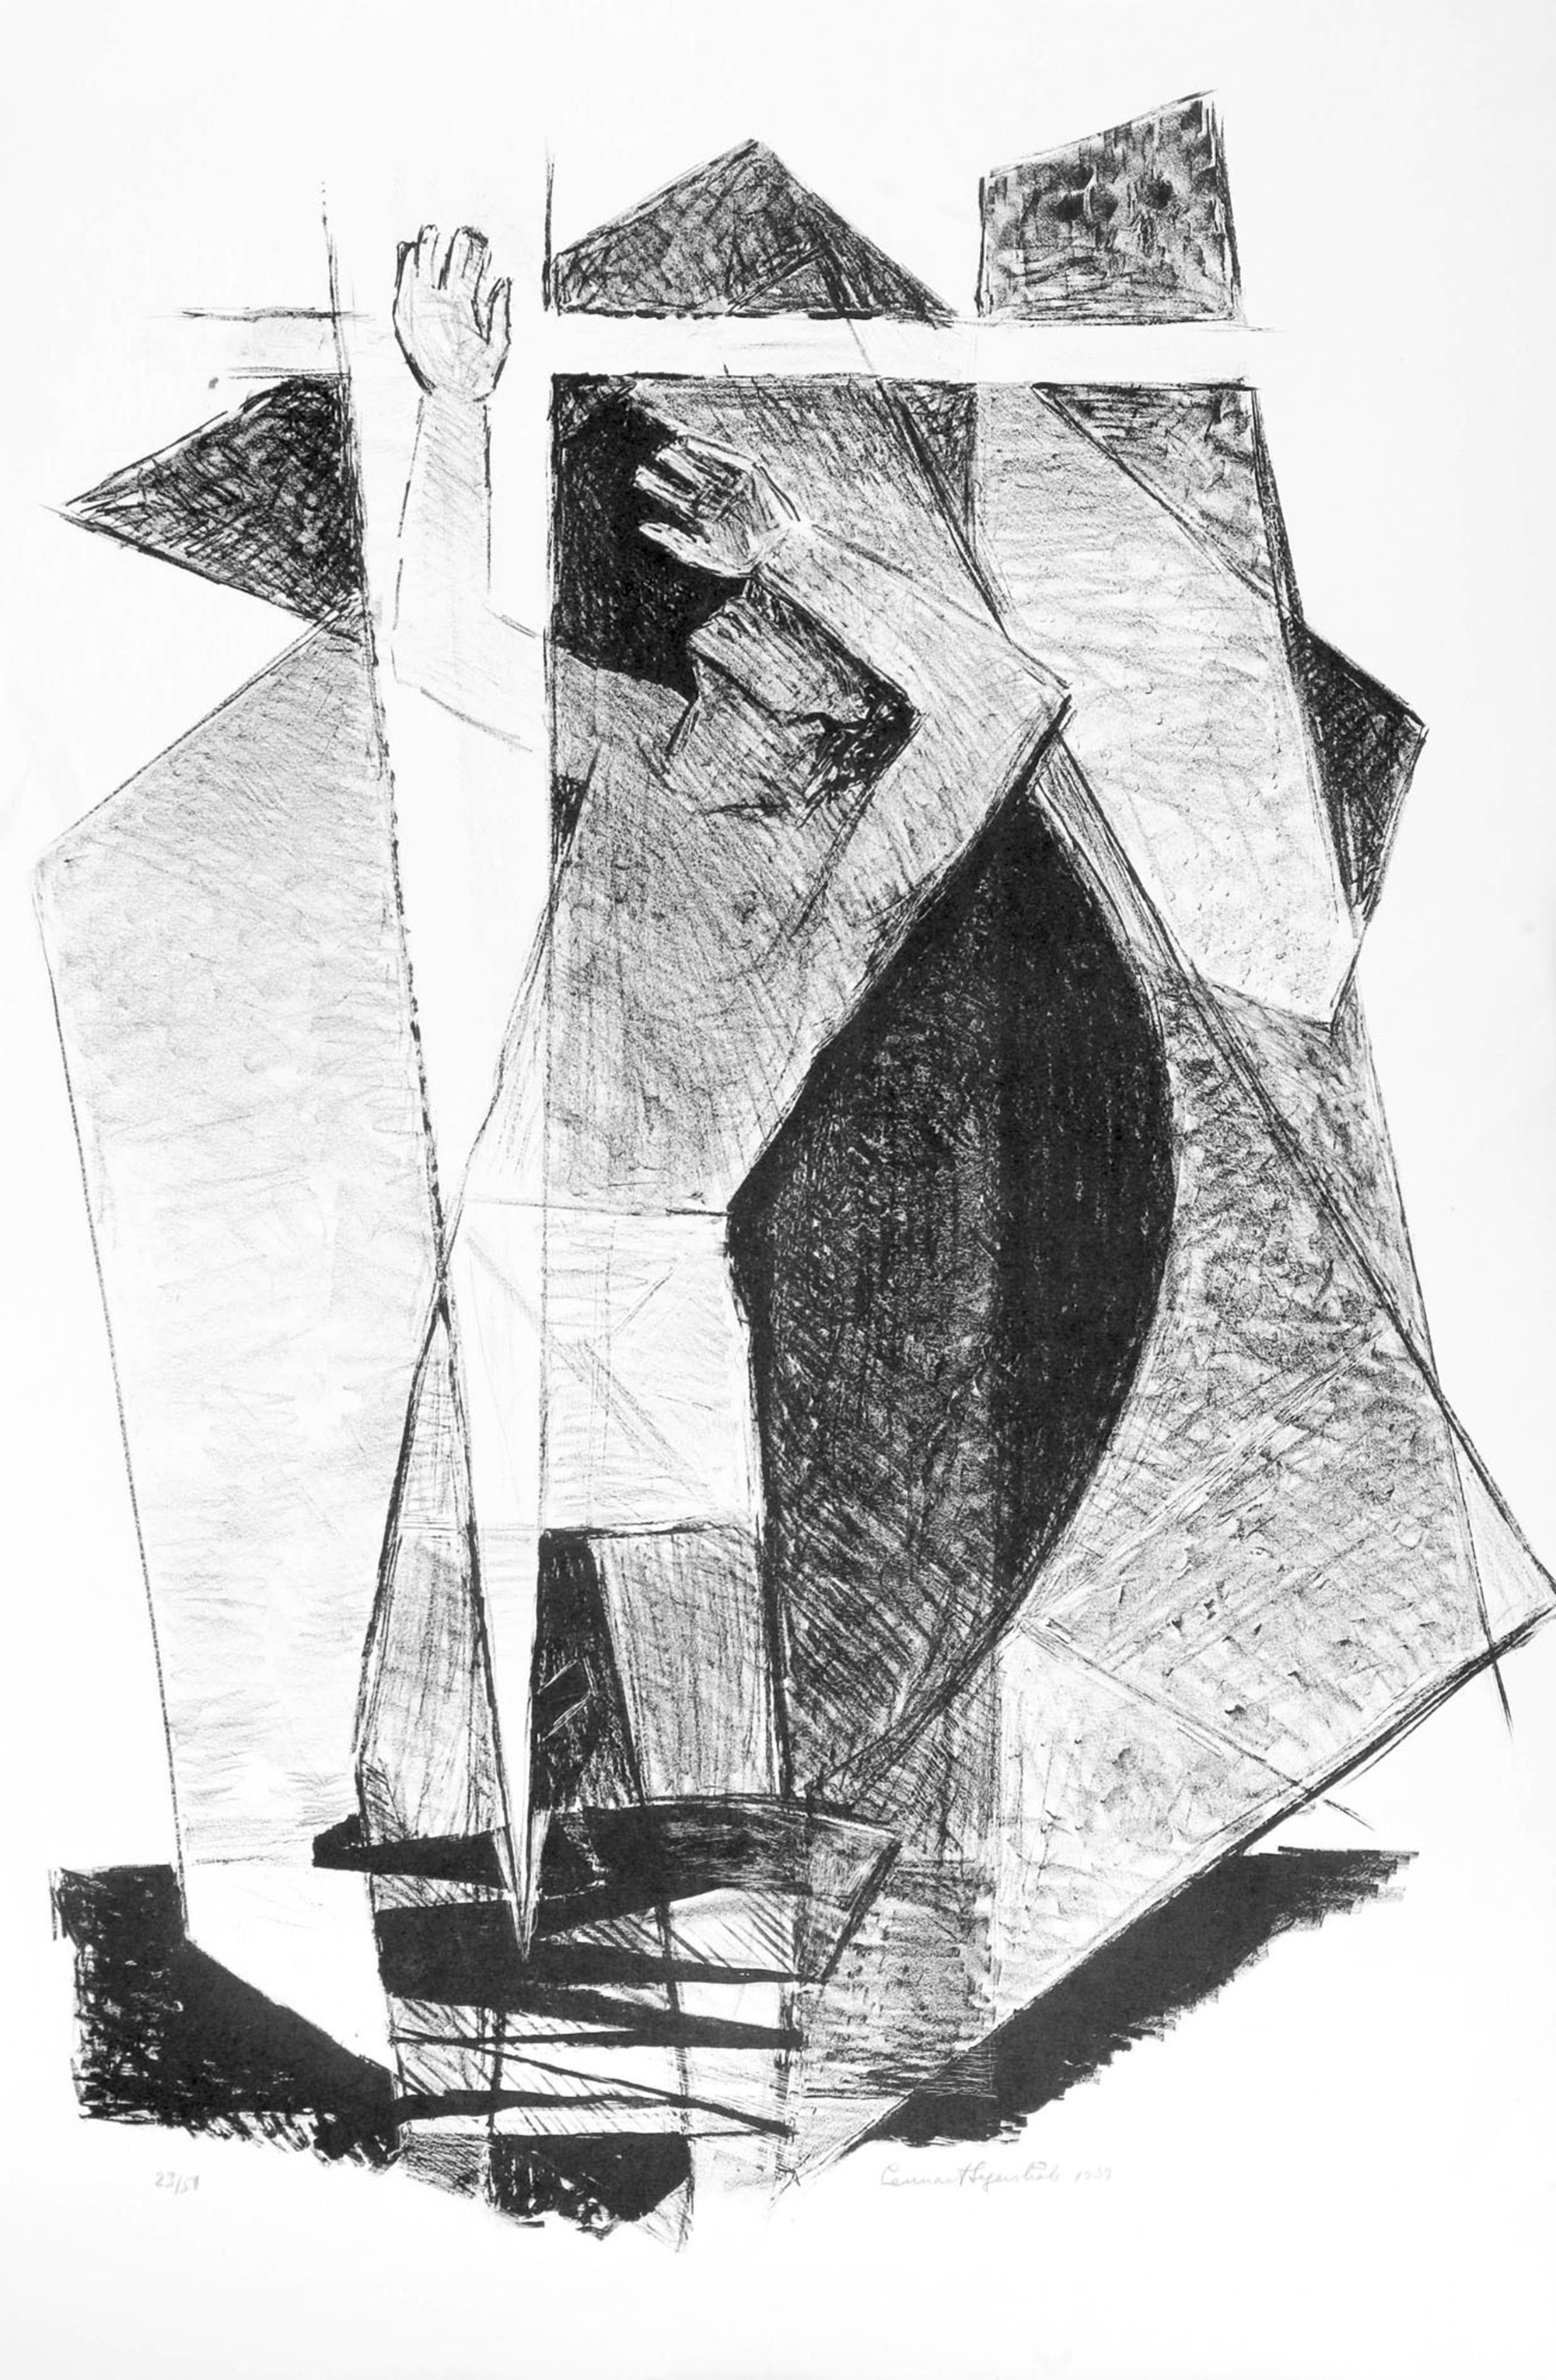 Ratkaisu - Avgörandet
litografia/litografi, 75 x 61 cm, 1959